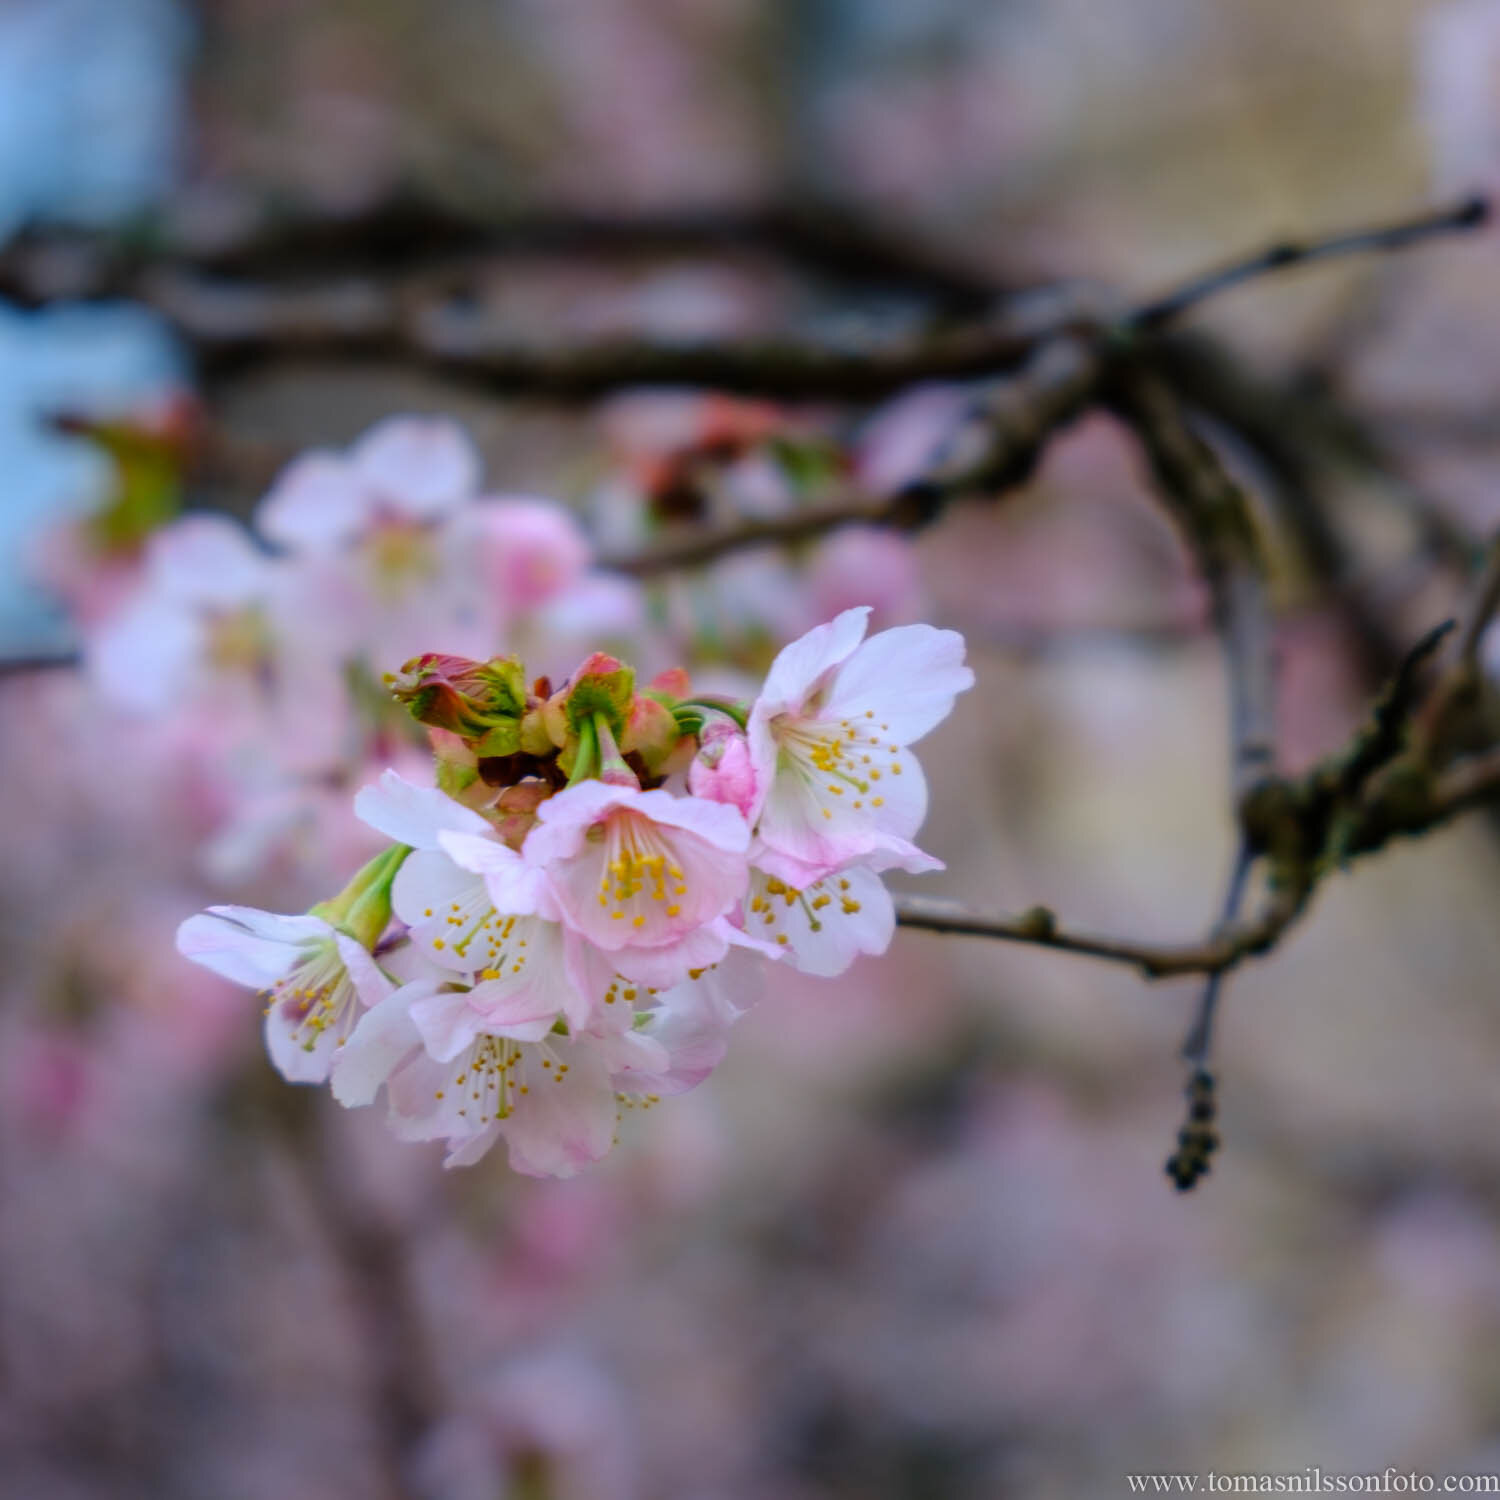 Day 113 - April 23: Japanese Cherry